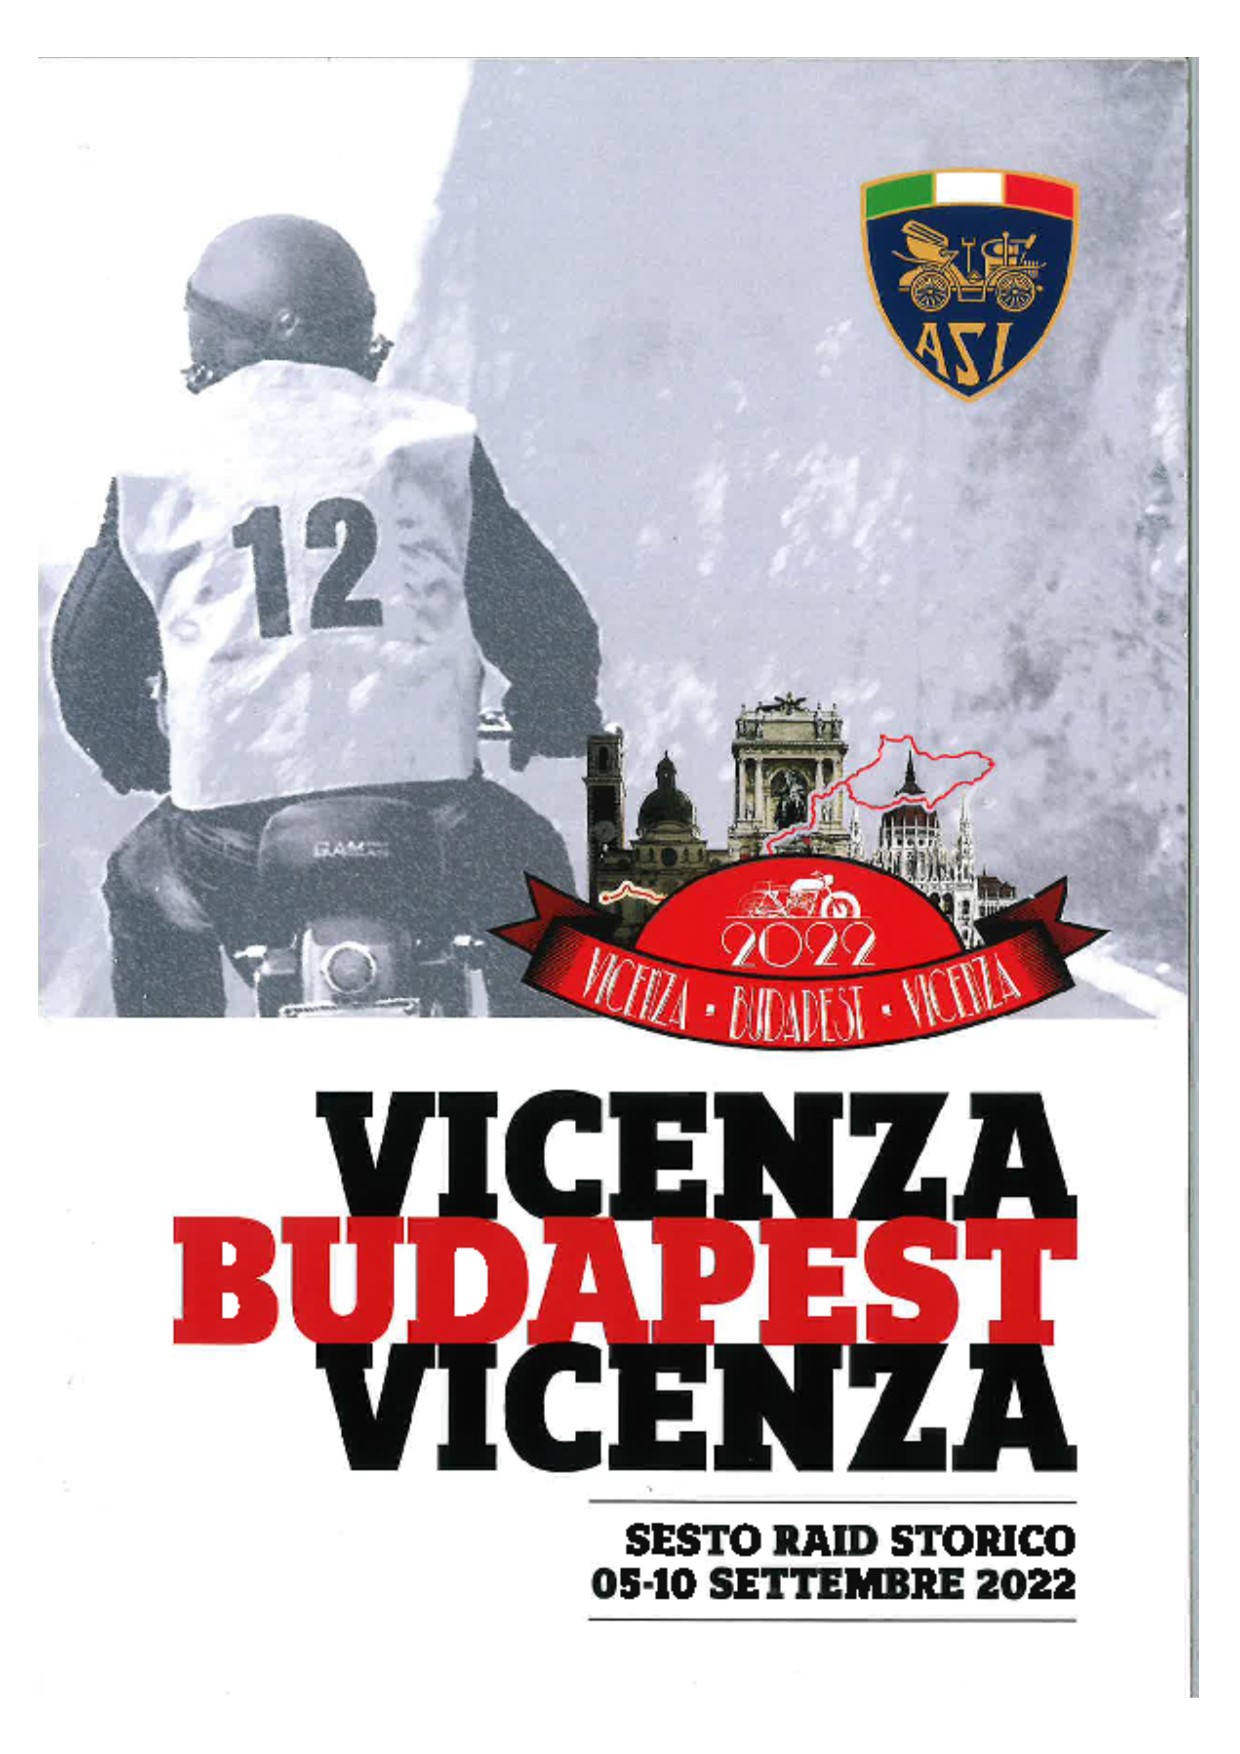 05.09.2022 Partenza raid storico Vicenza Budapest Vicenza